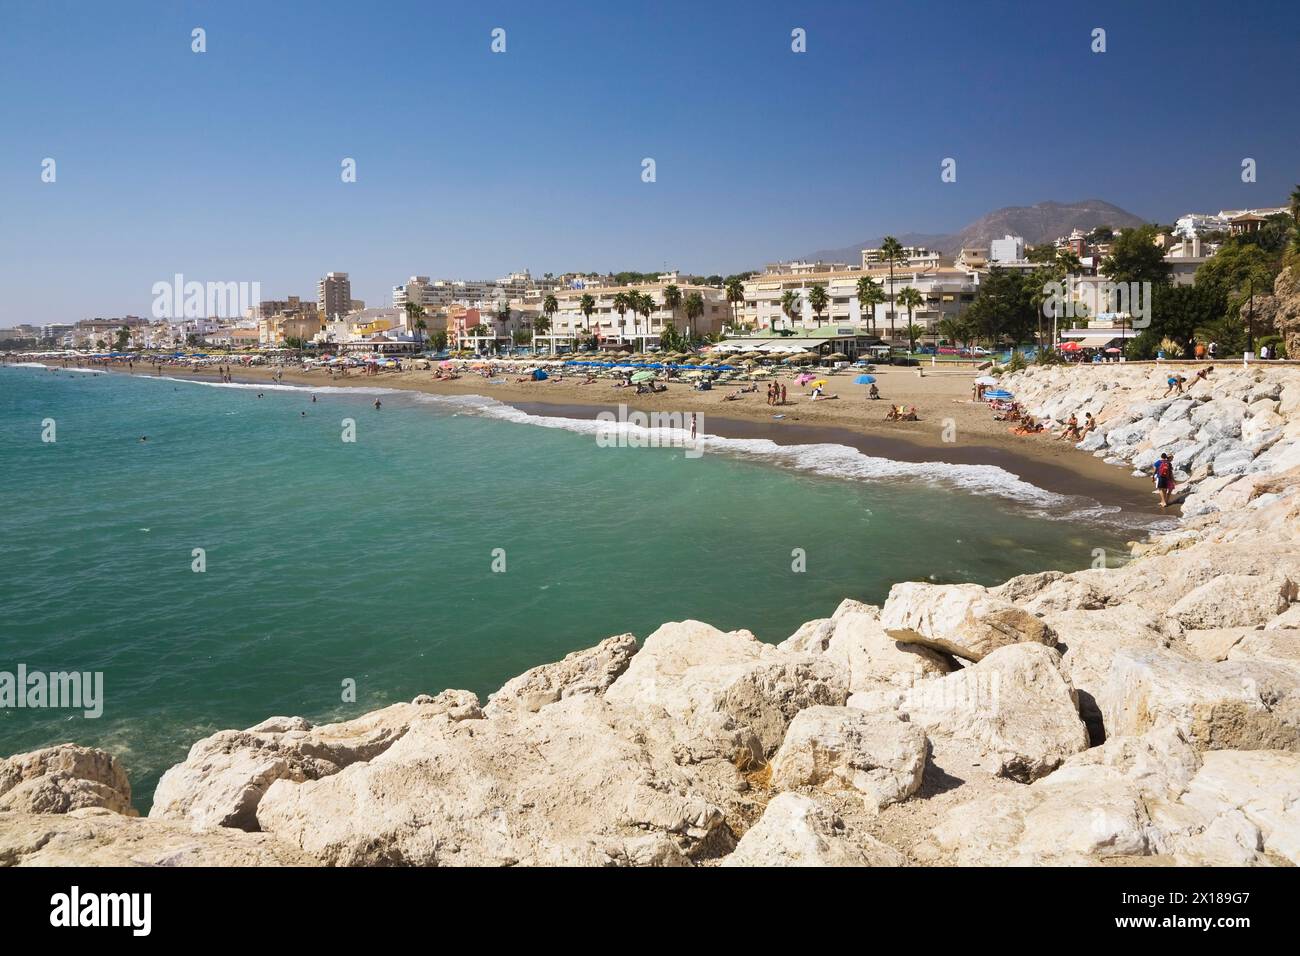 Sandstrand mit Badegästen und Hotels in Torremolinos, Costa del Sol, Malaga, Spanien Stockfoto